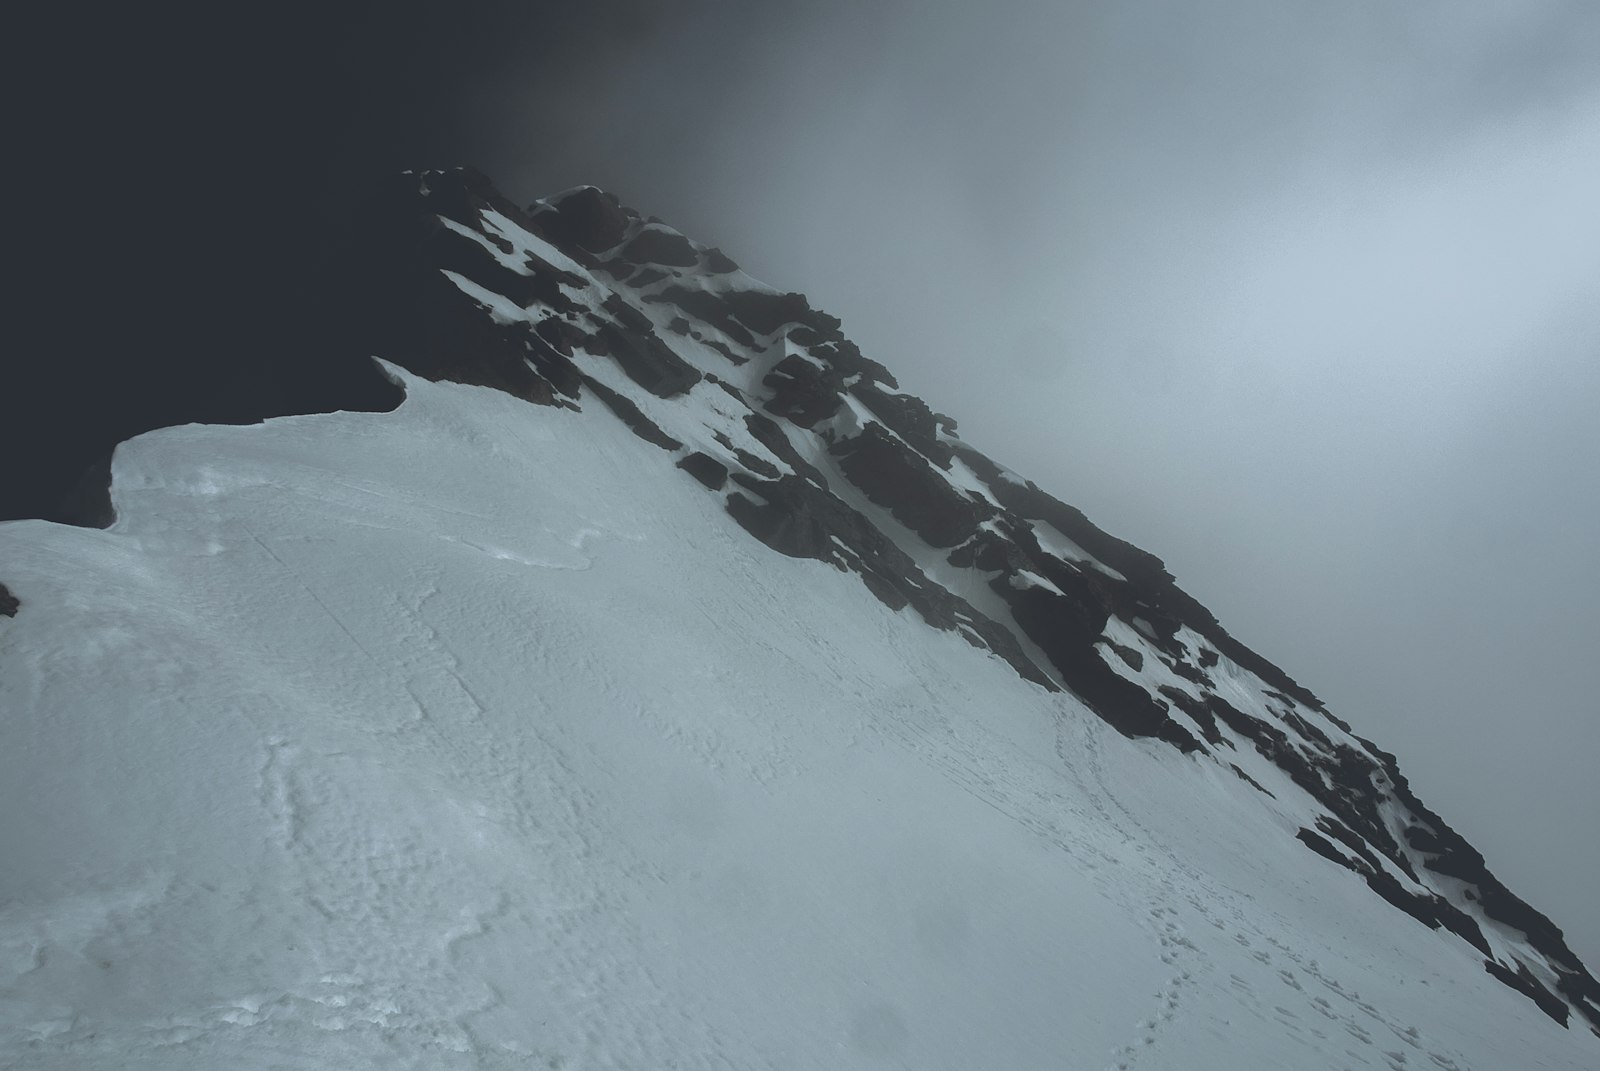 Nikon 1 V1 sample photo. Snow covered mountain under photography